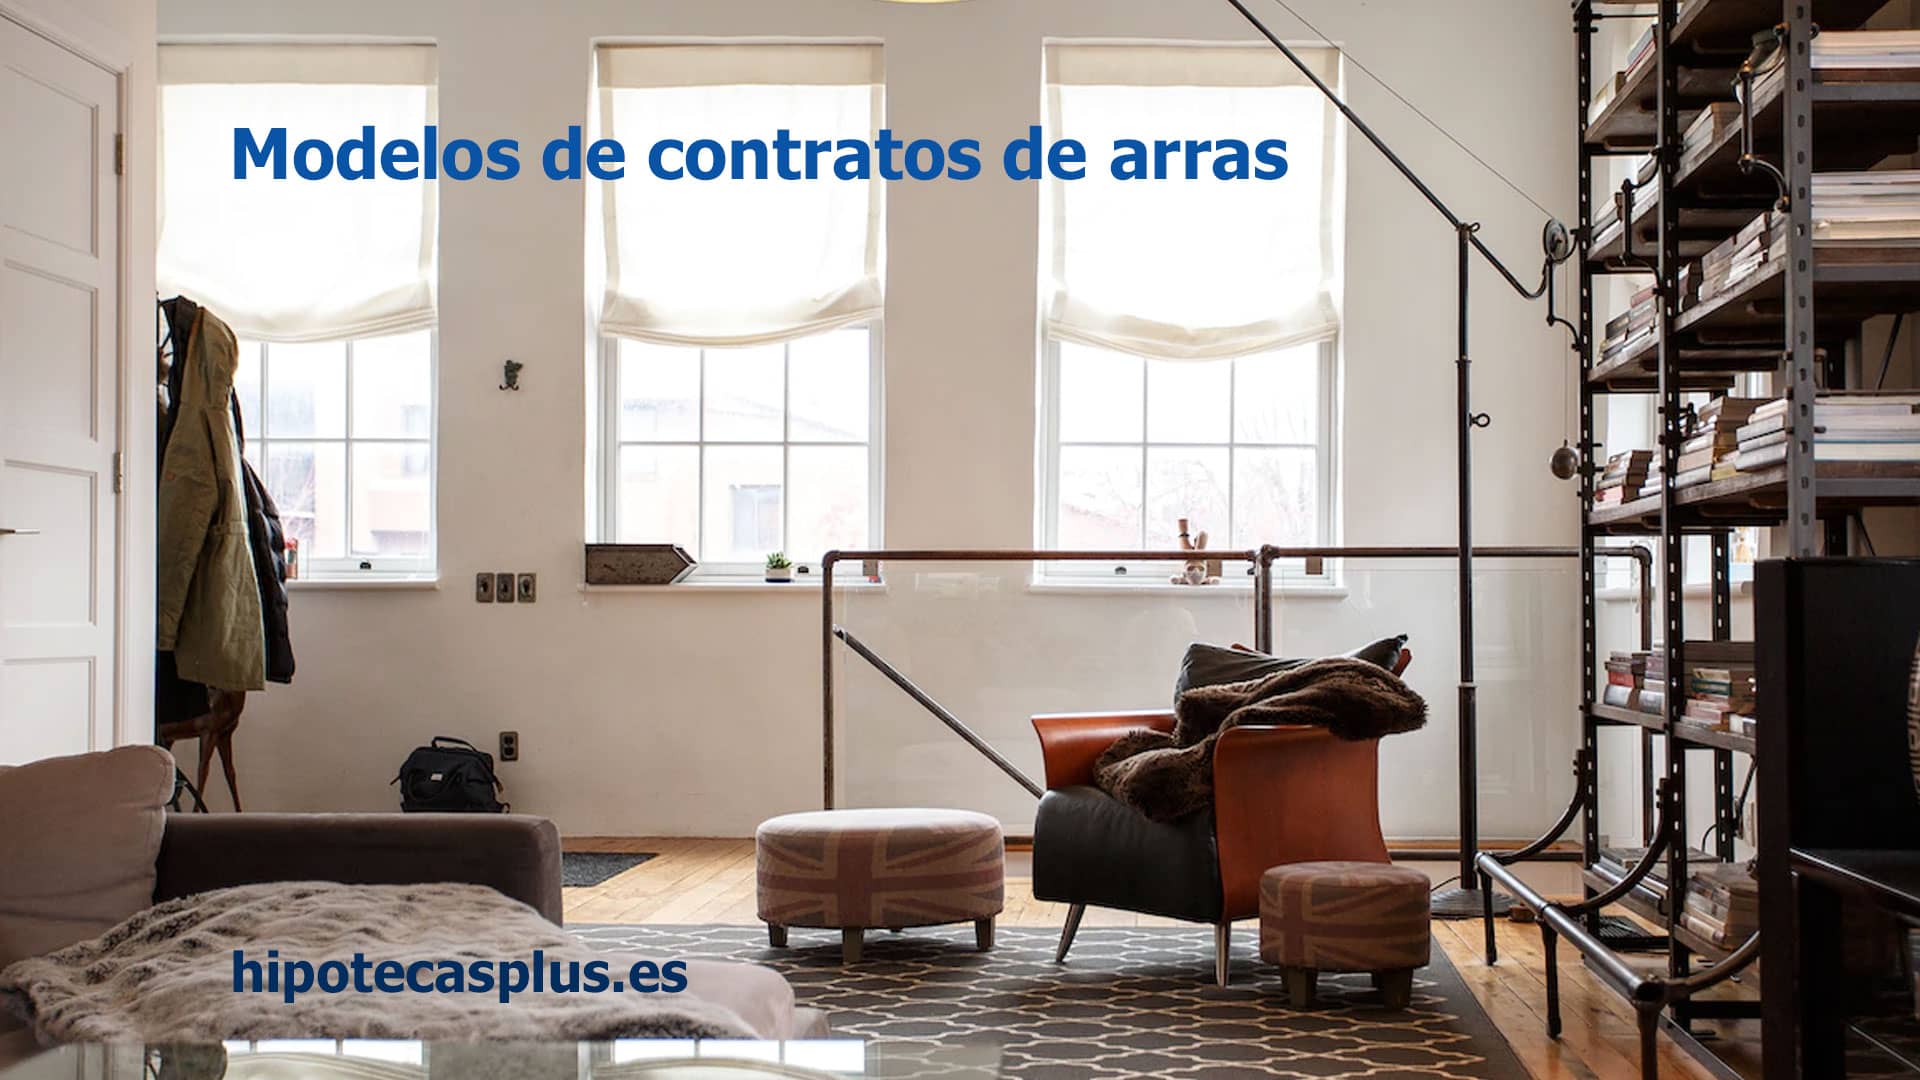 https://www.hipotecasplus.es/wp-content/uploads/mod-arras.jpg